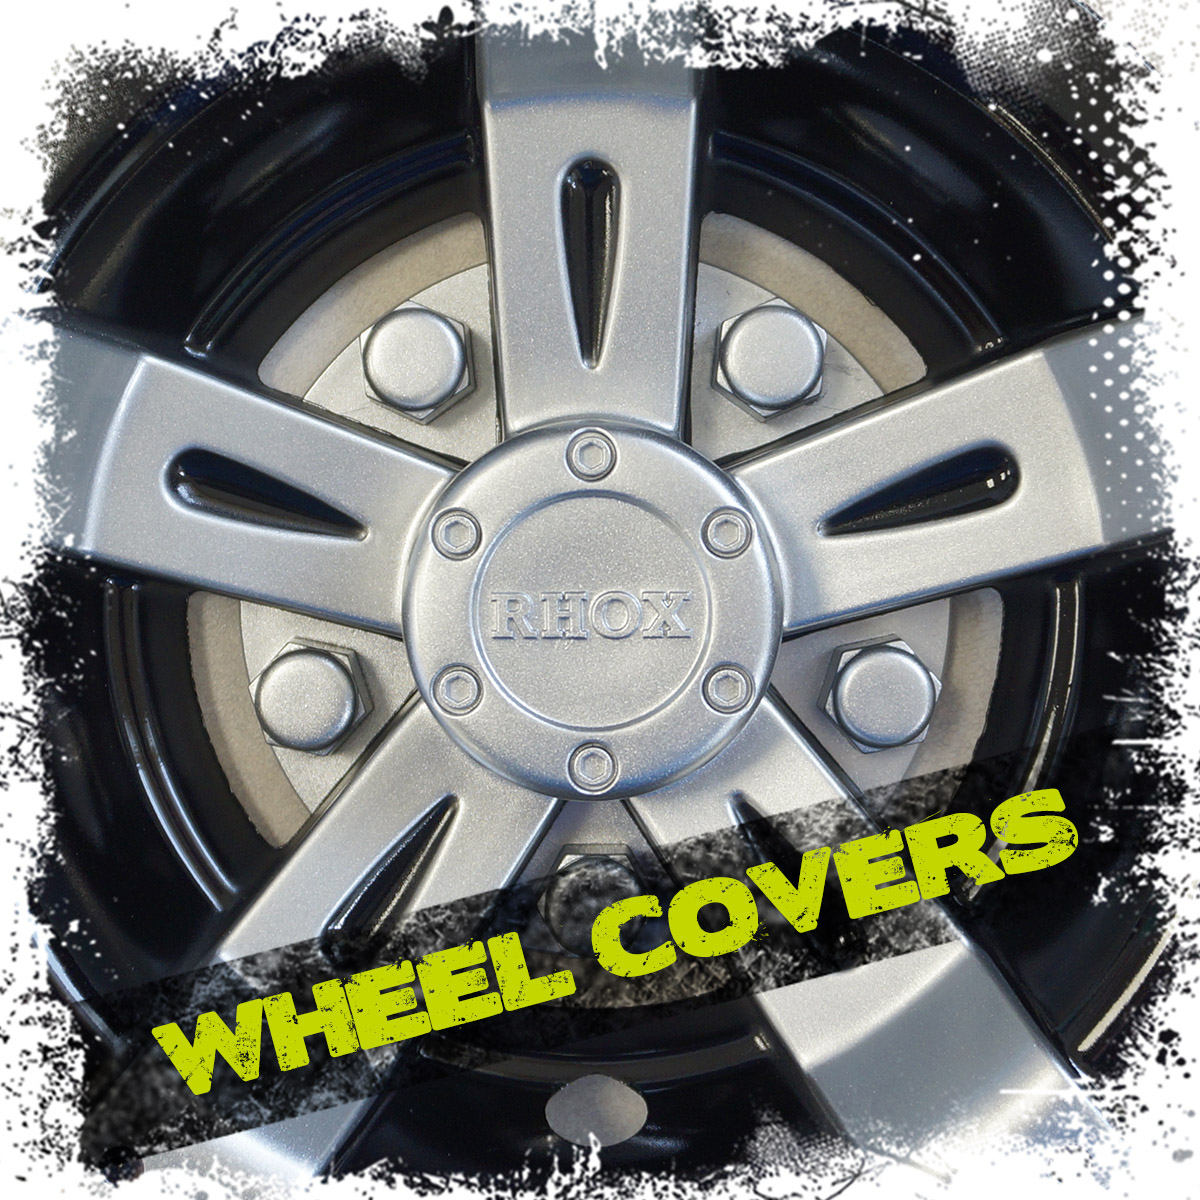 Wheel Covers